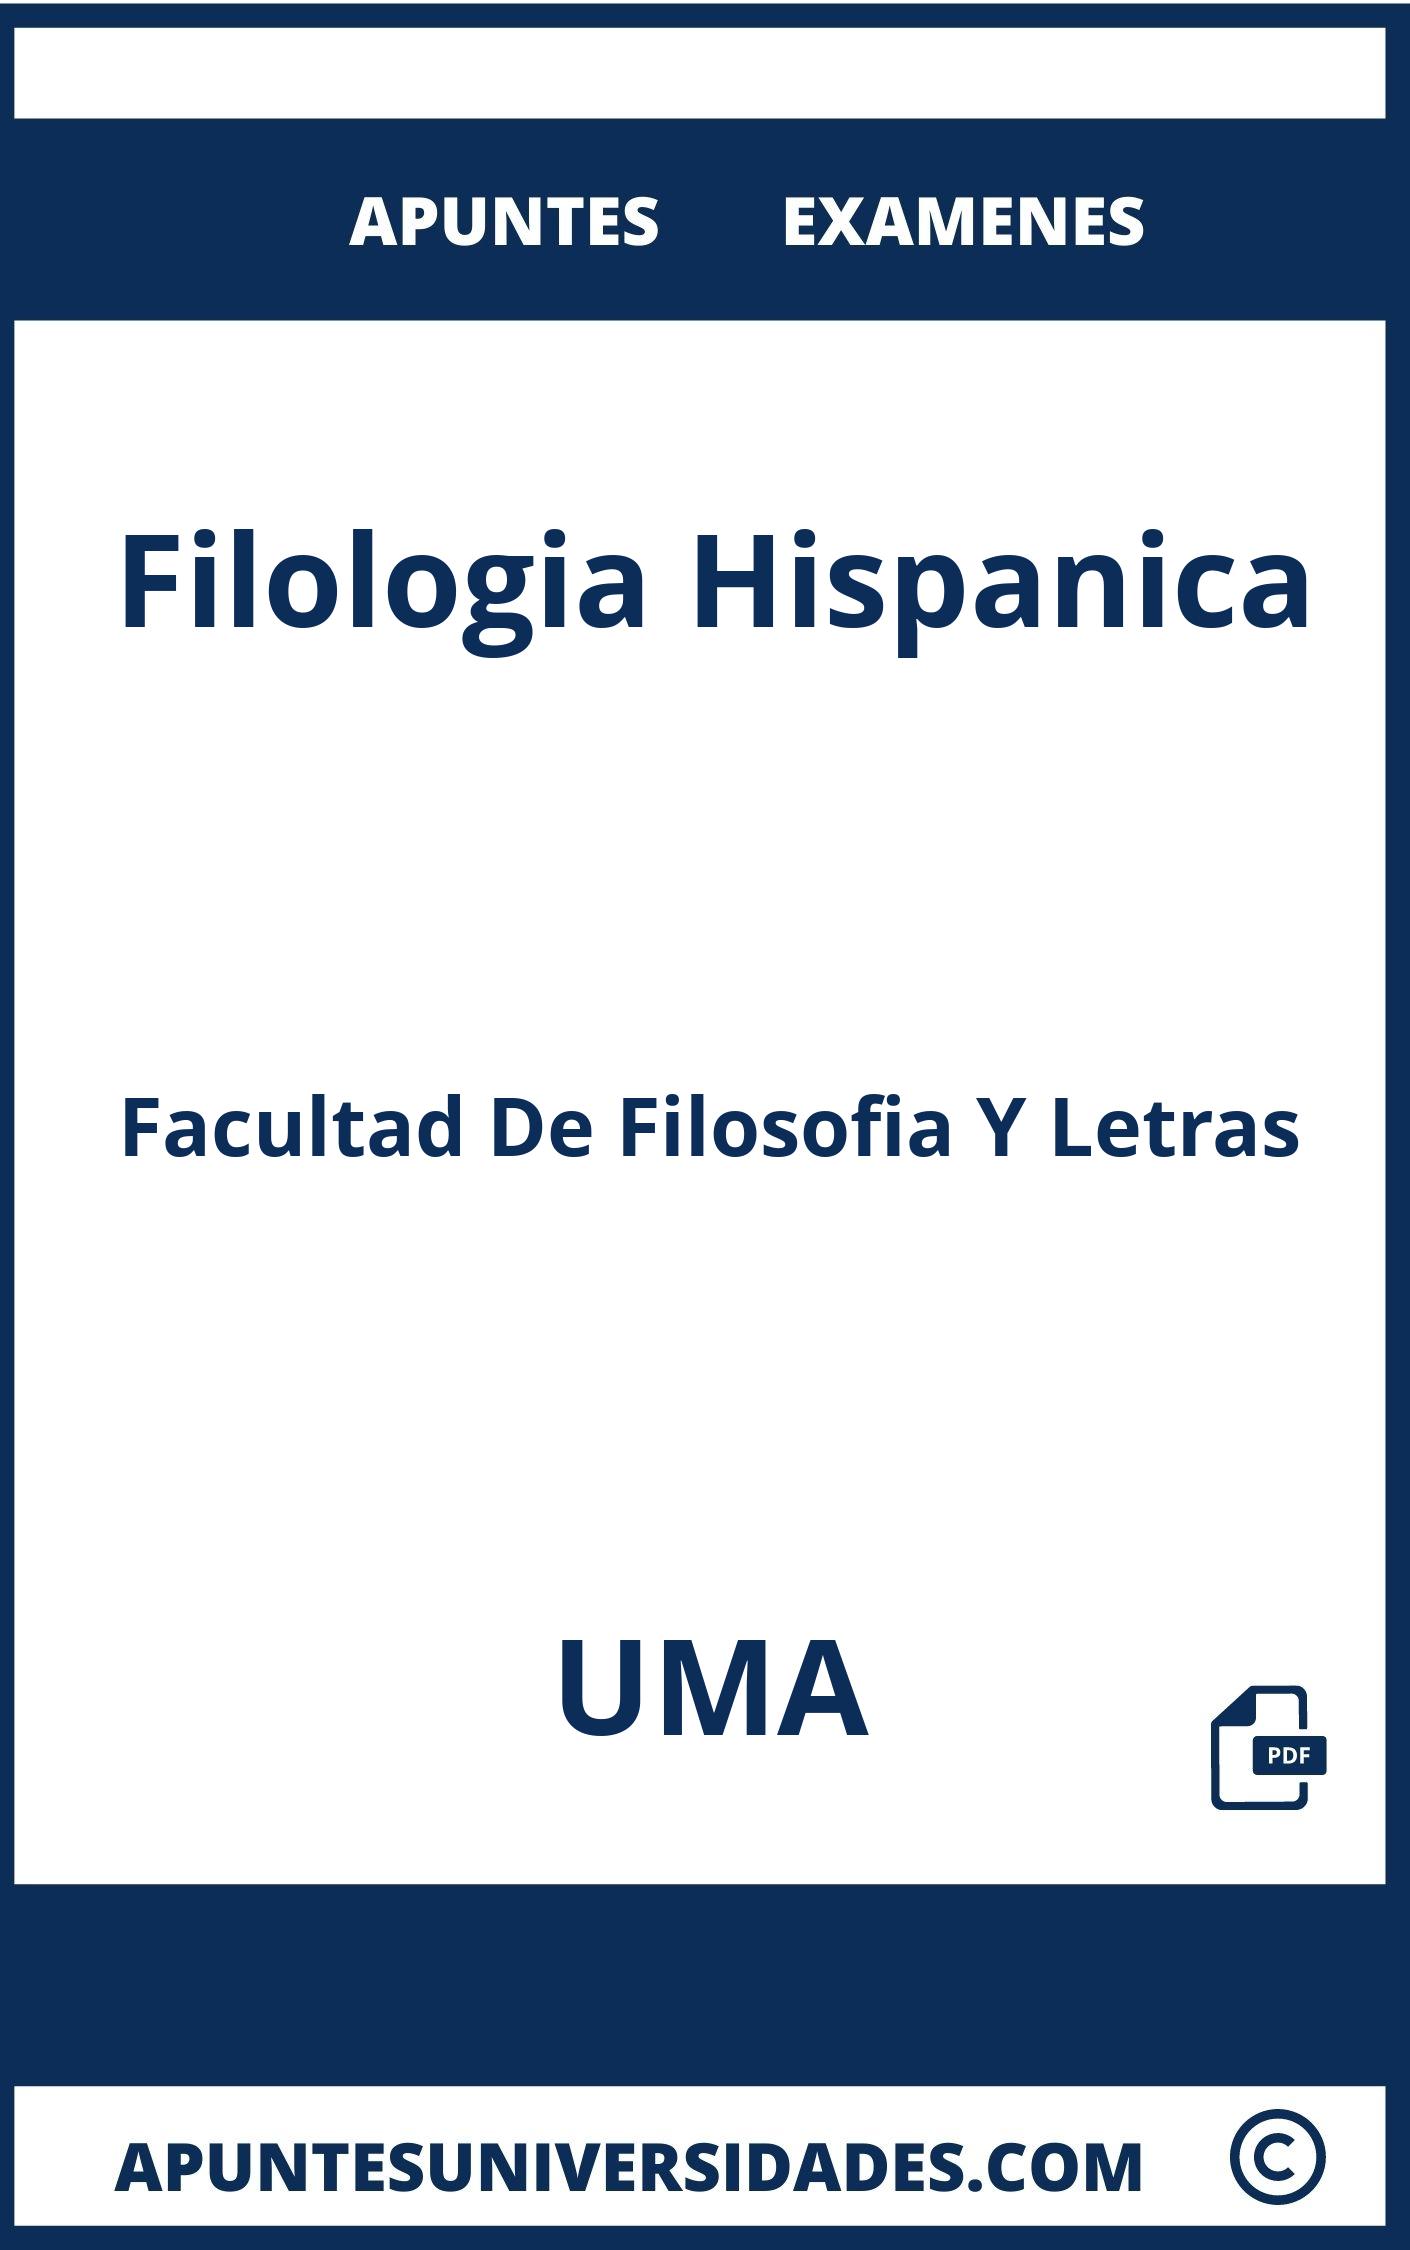 Apuntes y Examenes de Filologia Hispanica UMA